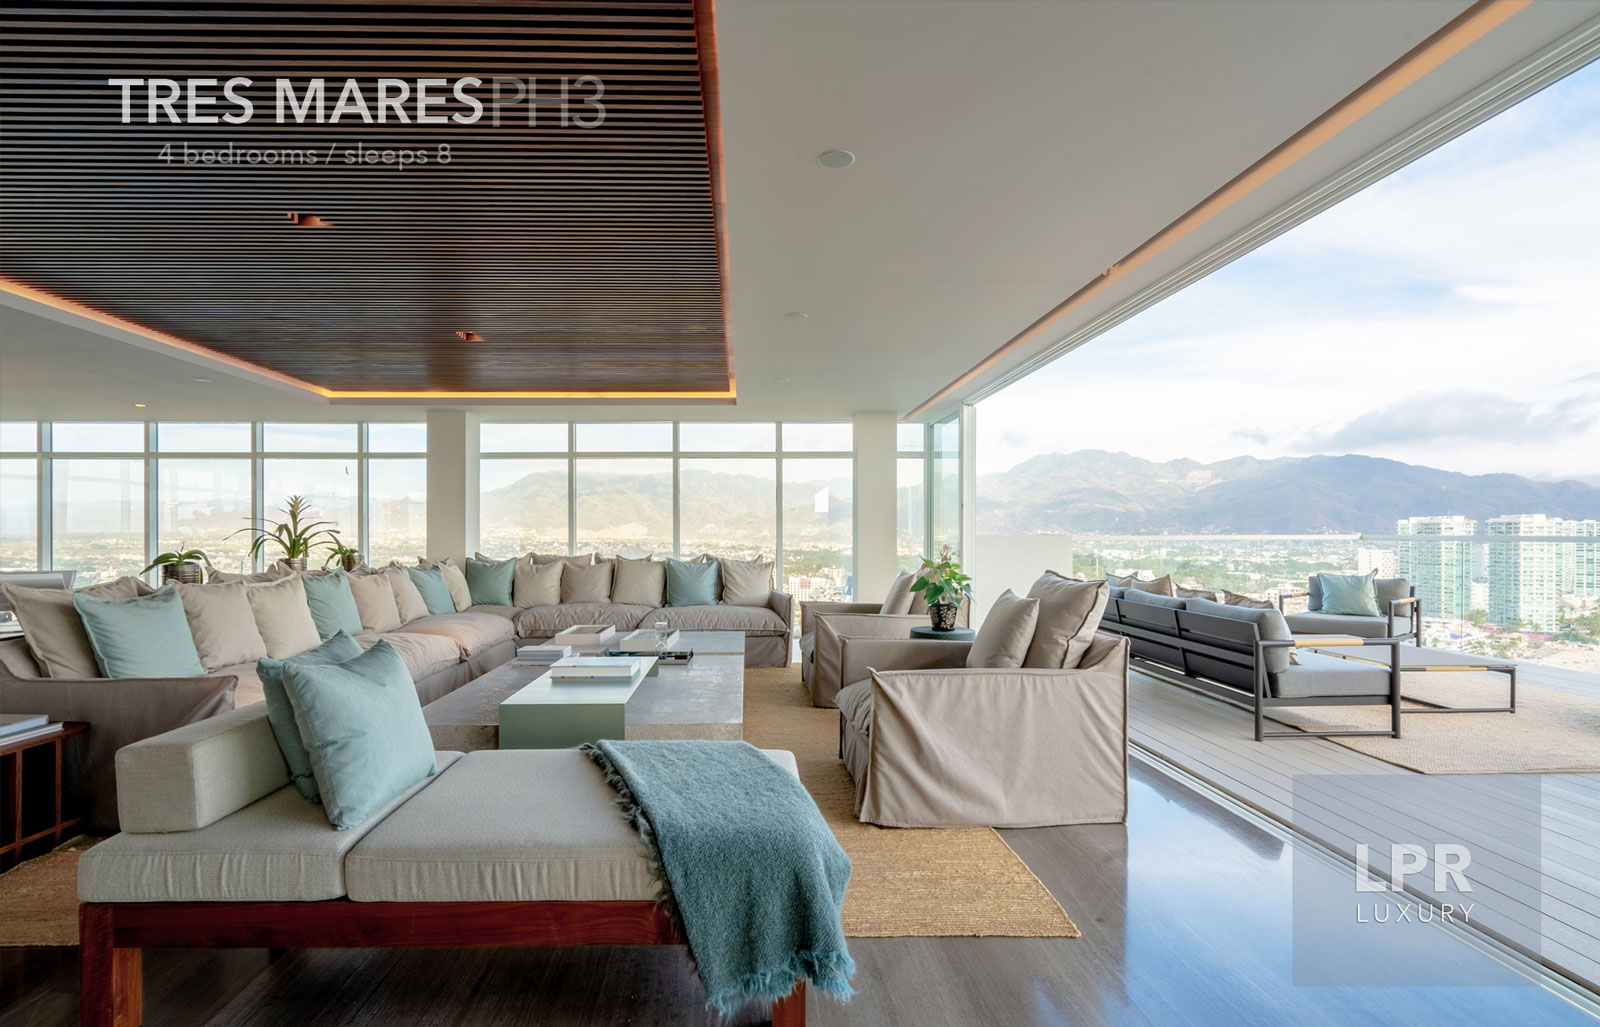 The Queen Penthouse at Tres Mares - Ultra Luxury Real estate in Marina Vallarta, Puerto Vallarta, Jalisco, Mexico